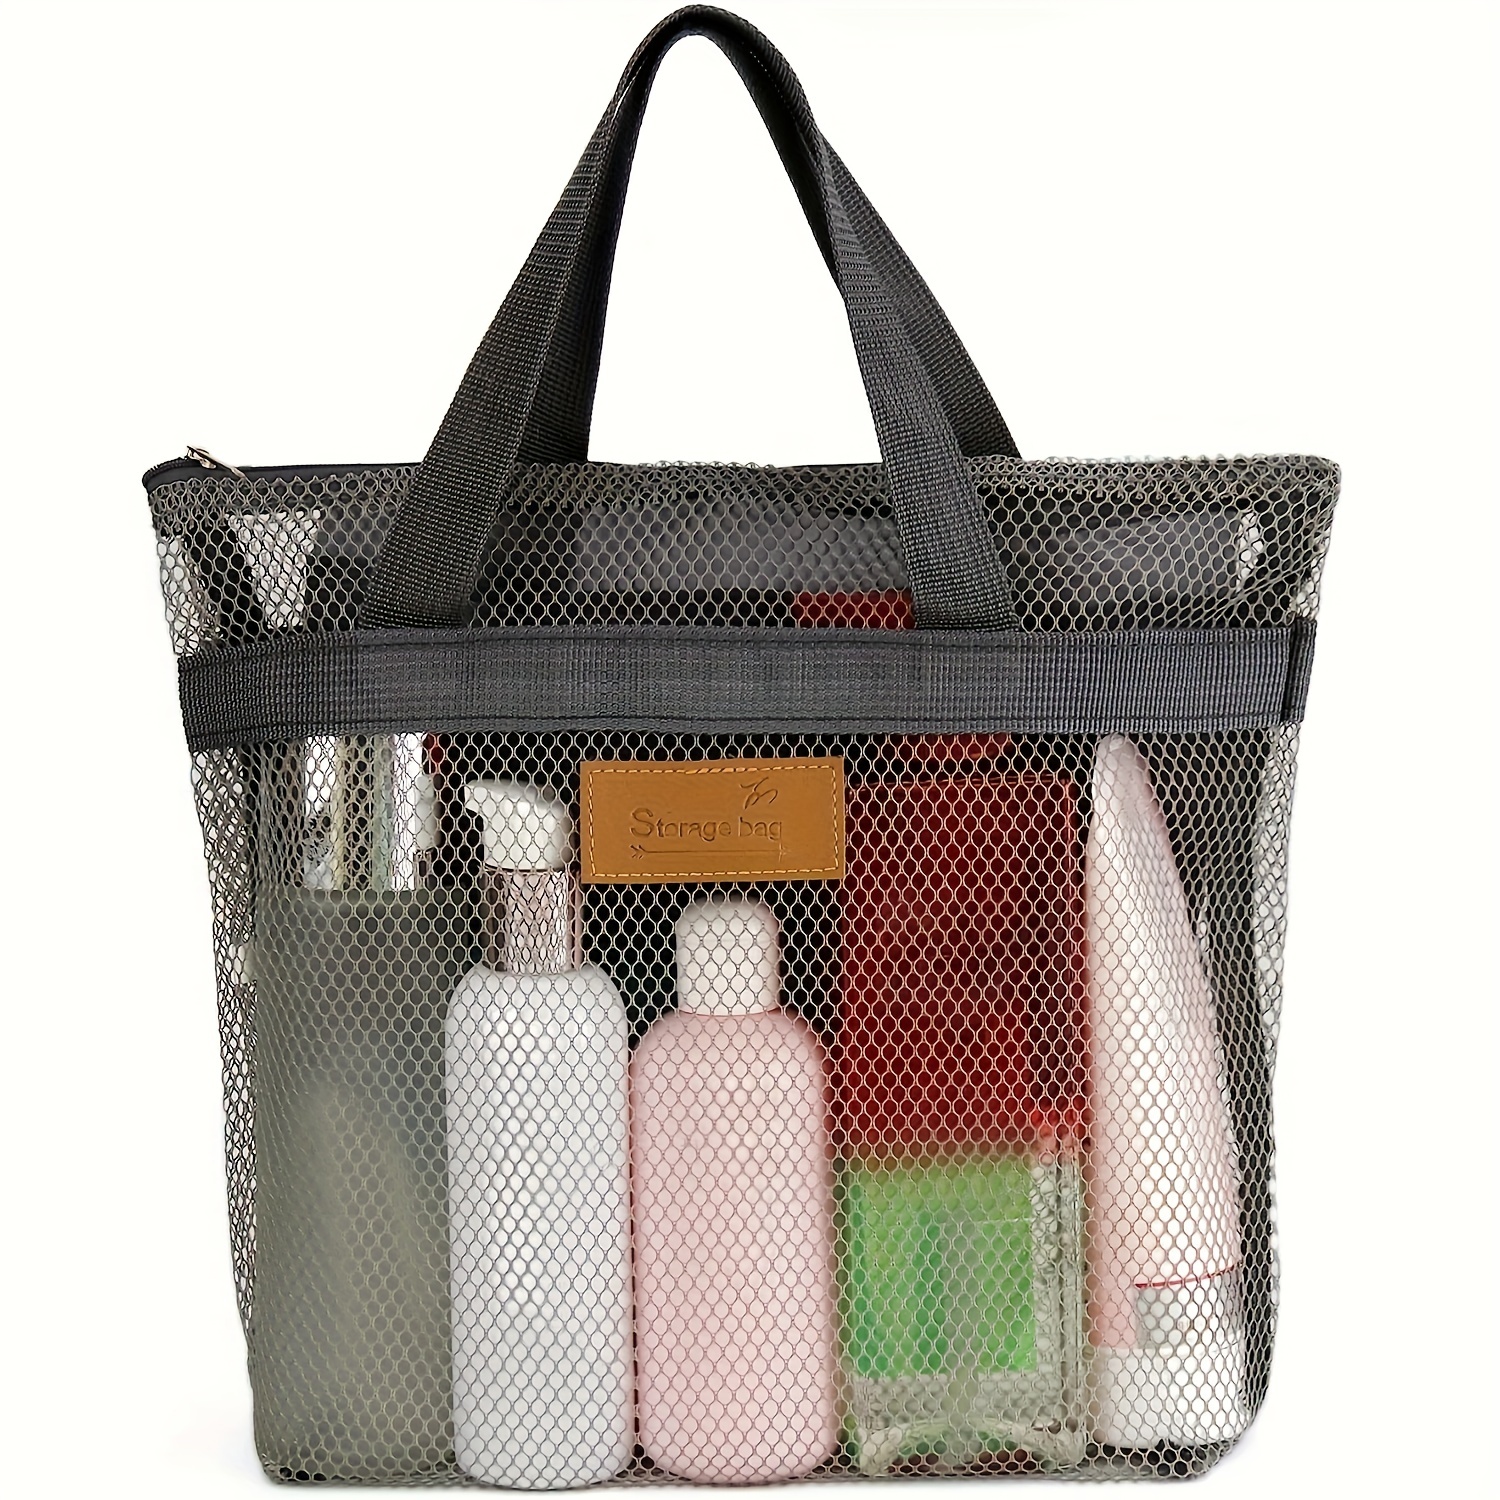 Shower Caddy Tote Mesh Organizer Bag Pockets Black & Pink Dorm Travel Craft  NEW